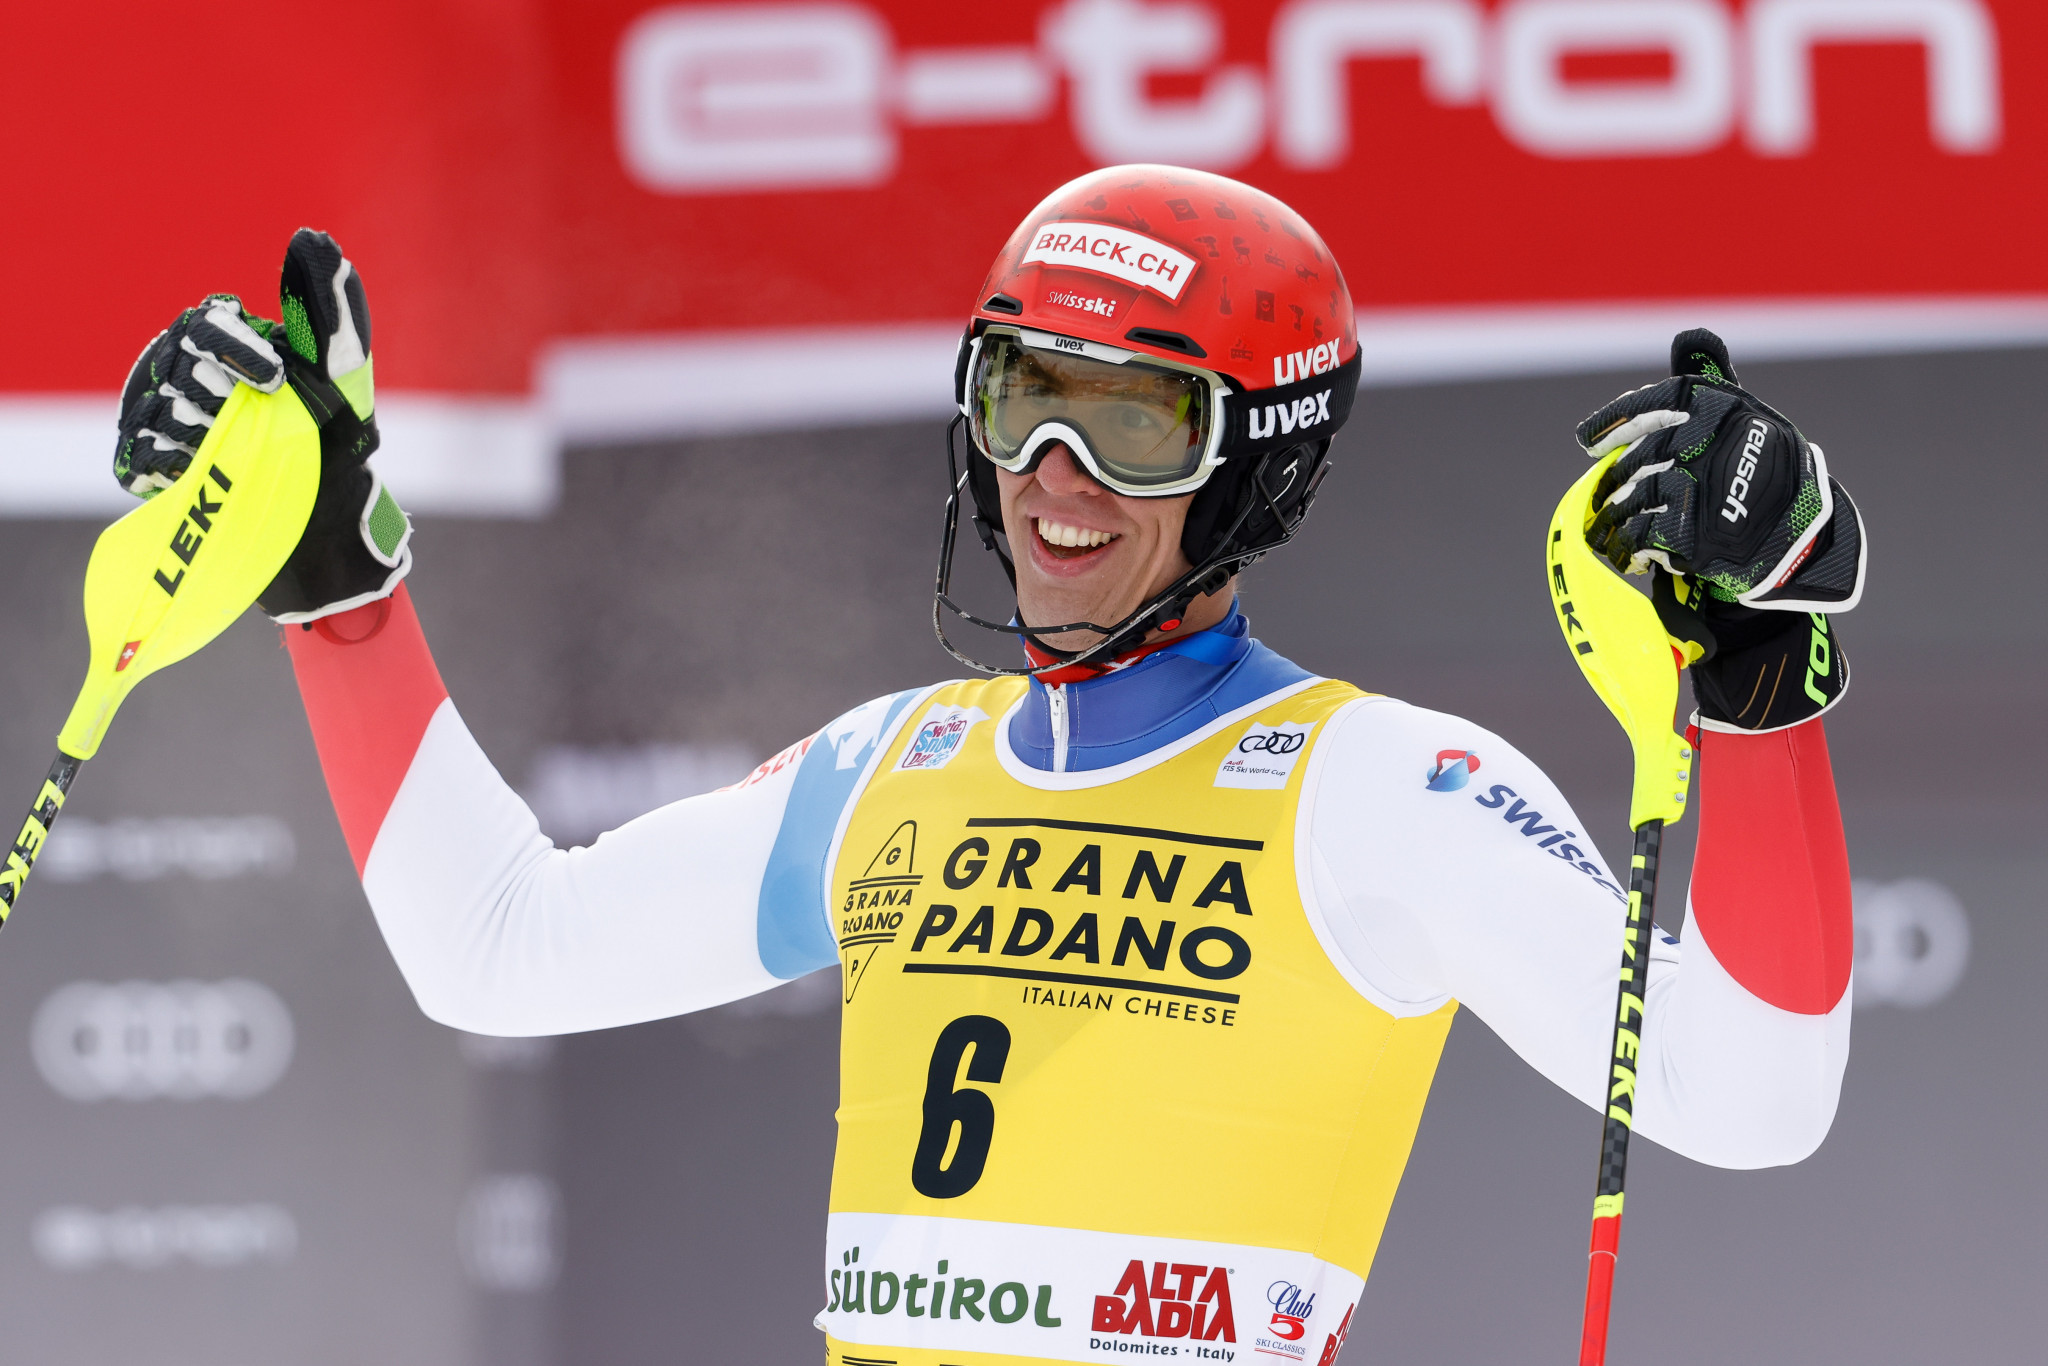 Zenhäusern wins fourth FIS Alpine Ski World Cup race in Alta Badia